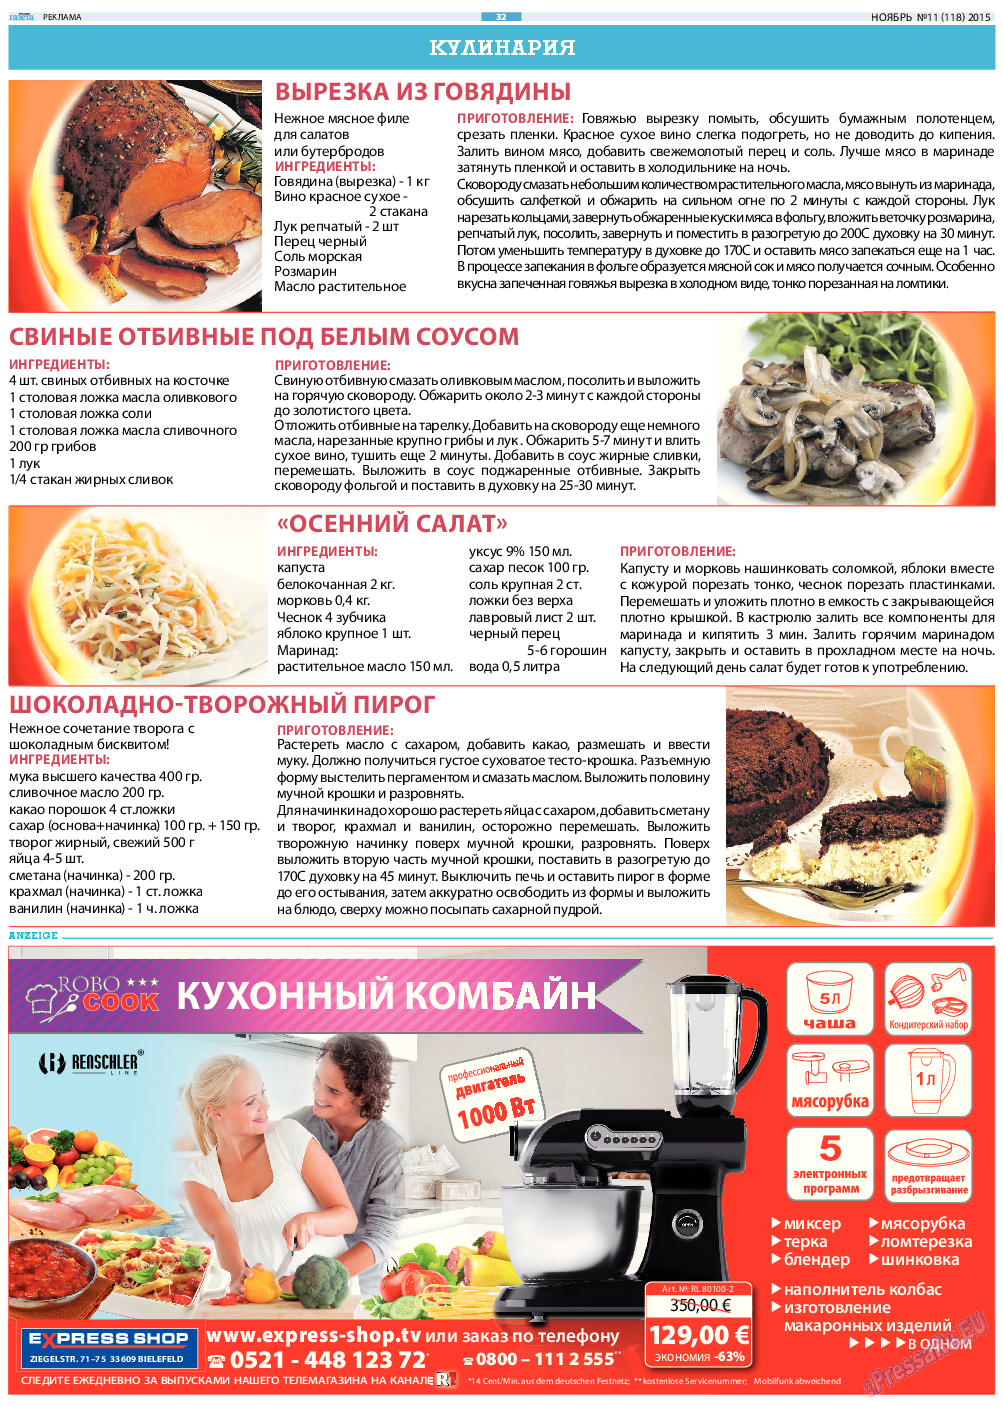 Русская Газета, газета. 2015 №11 стр.32